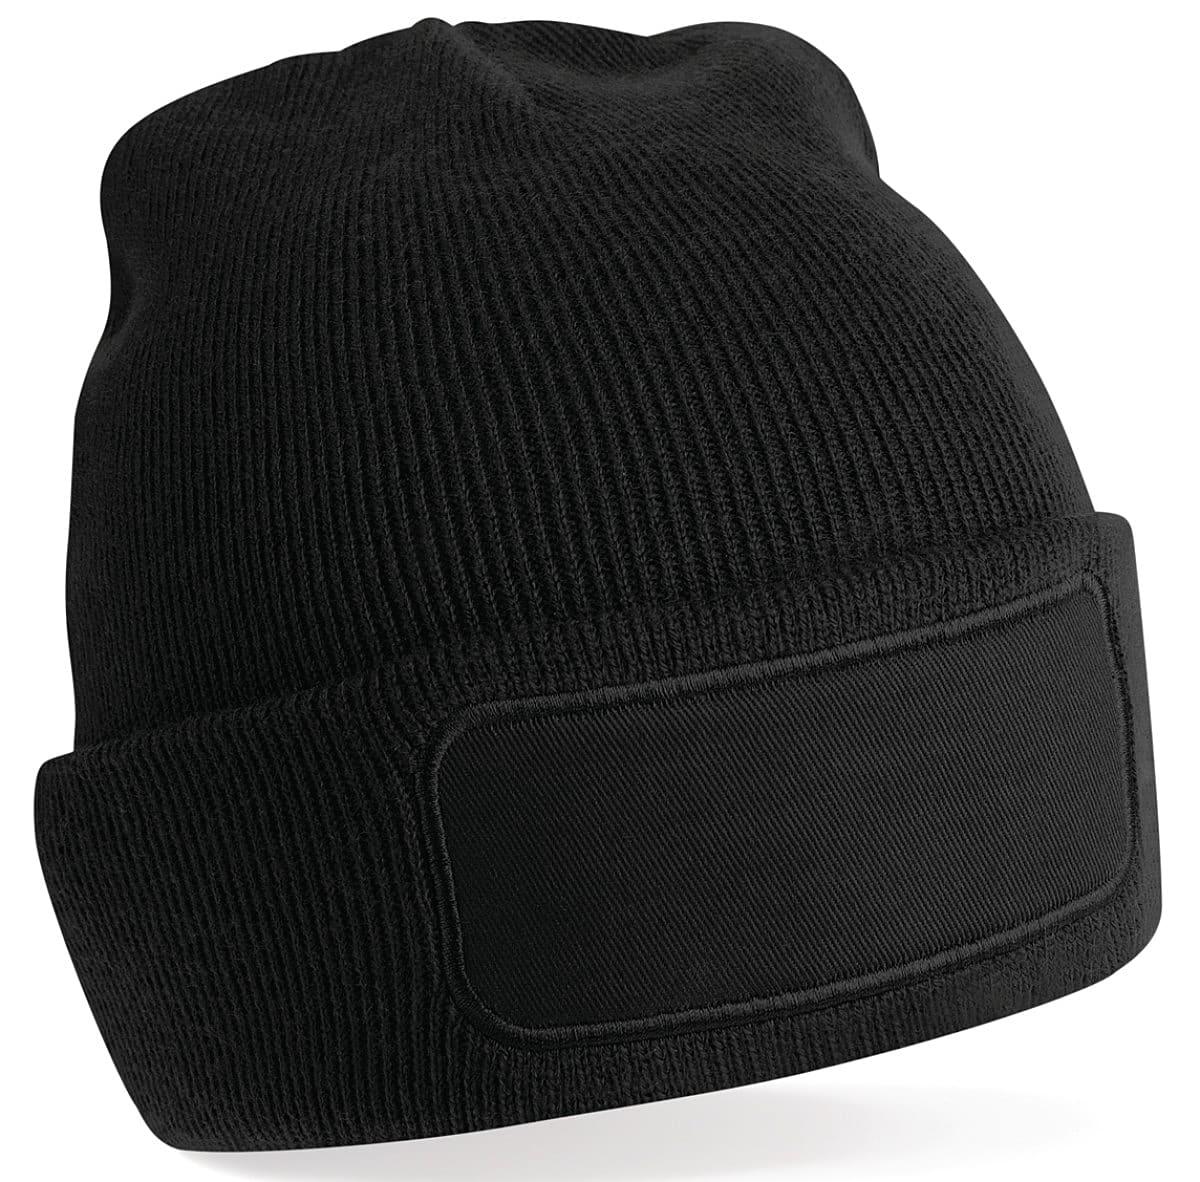 Beechfield Original Patch Beanie Hat in Black (Product Code: B445)